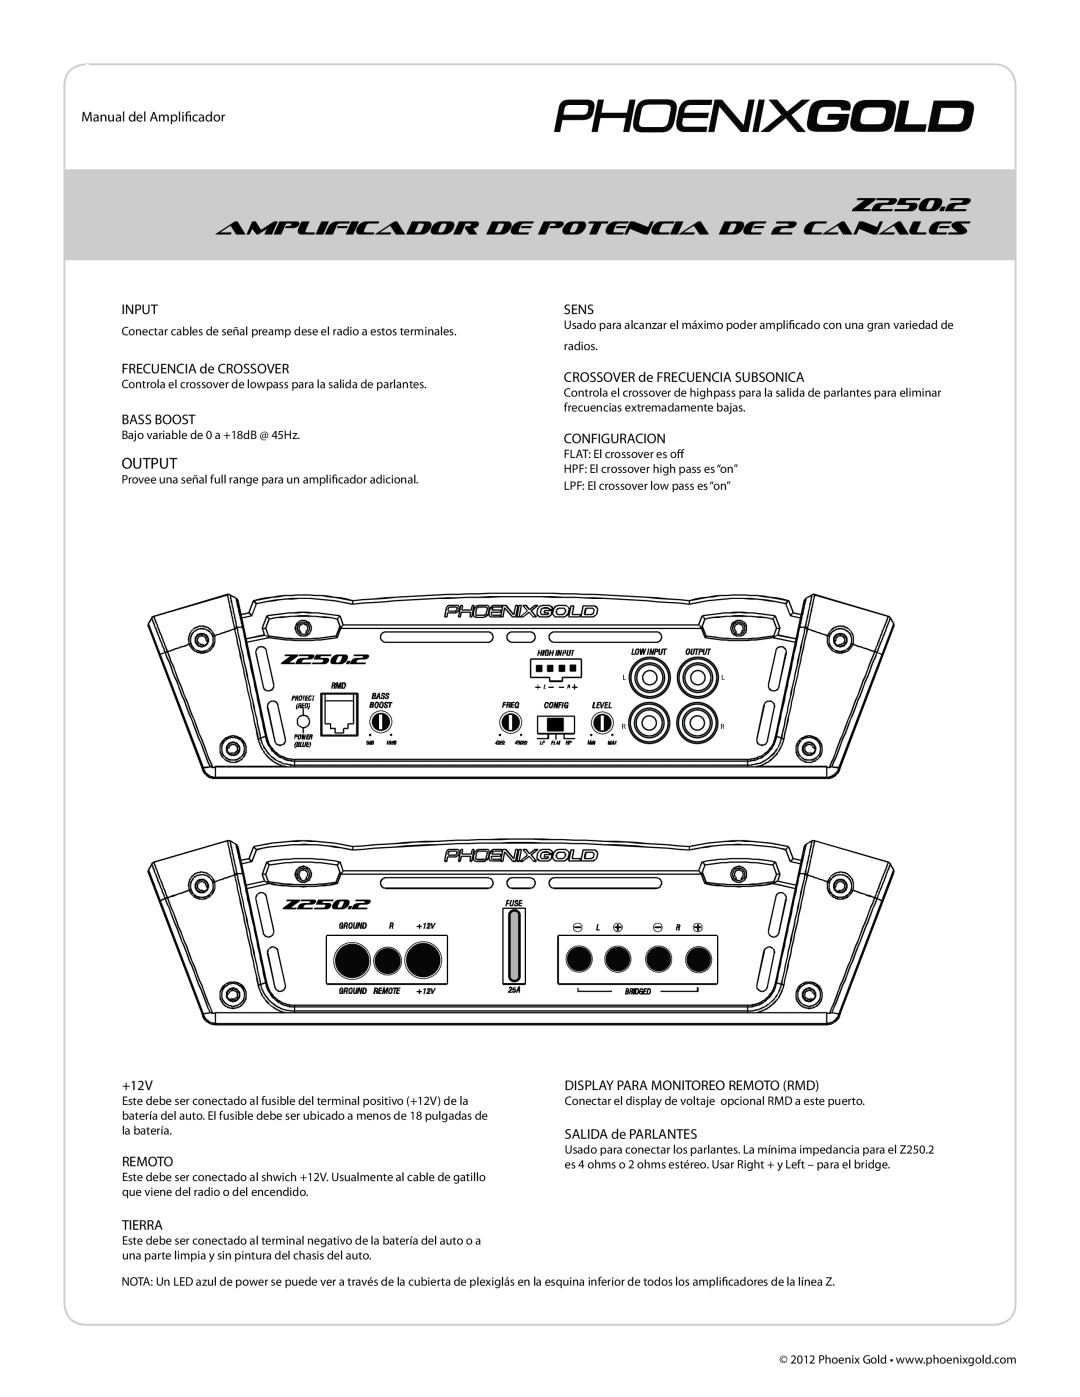 Phoenix Gold Z500.4, Z500.1 manual Z250.2 AMPLIFICADOR DE POTENCIA DE 2 CANALES, Output 